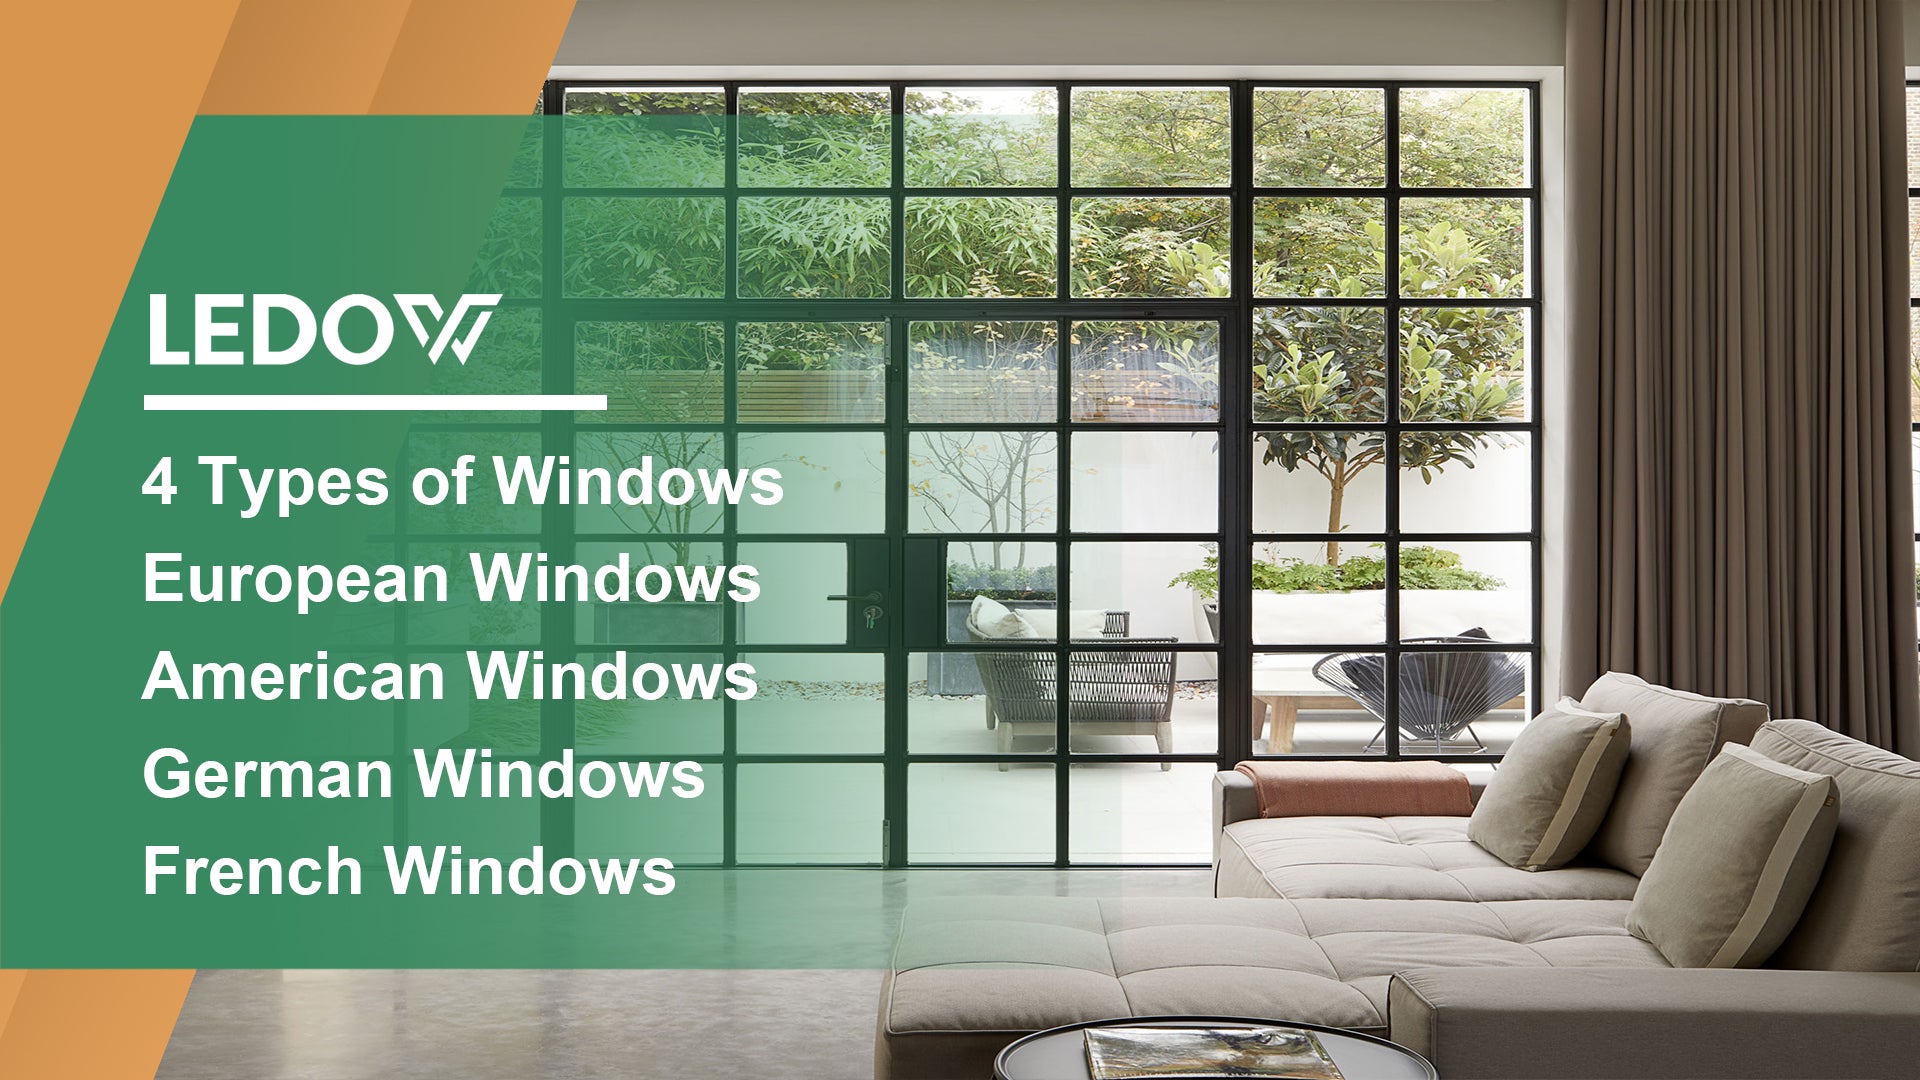 4 Types of Windows: European Windows, American Windows, German Windows, and French Windows